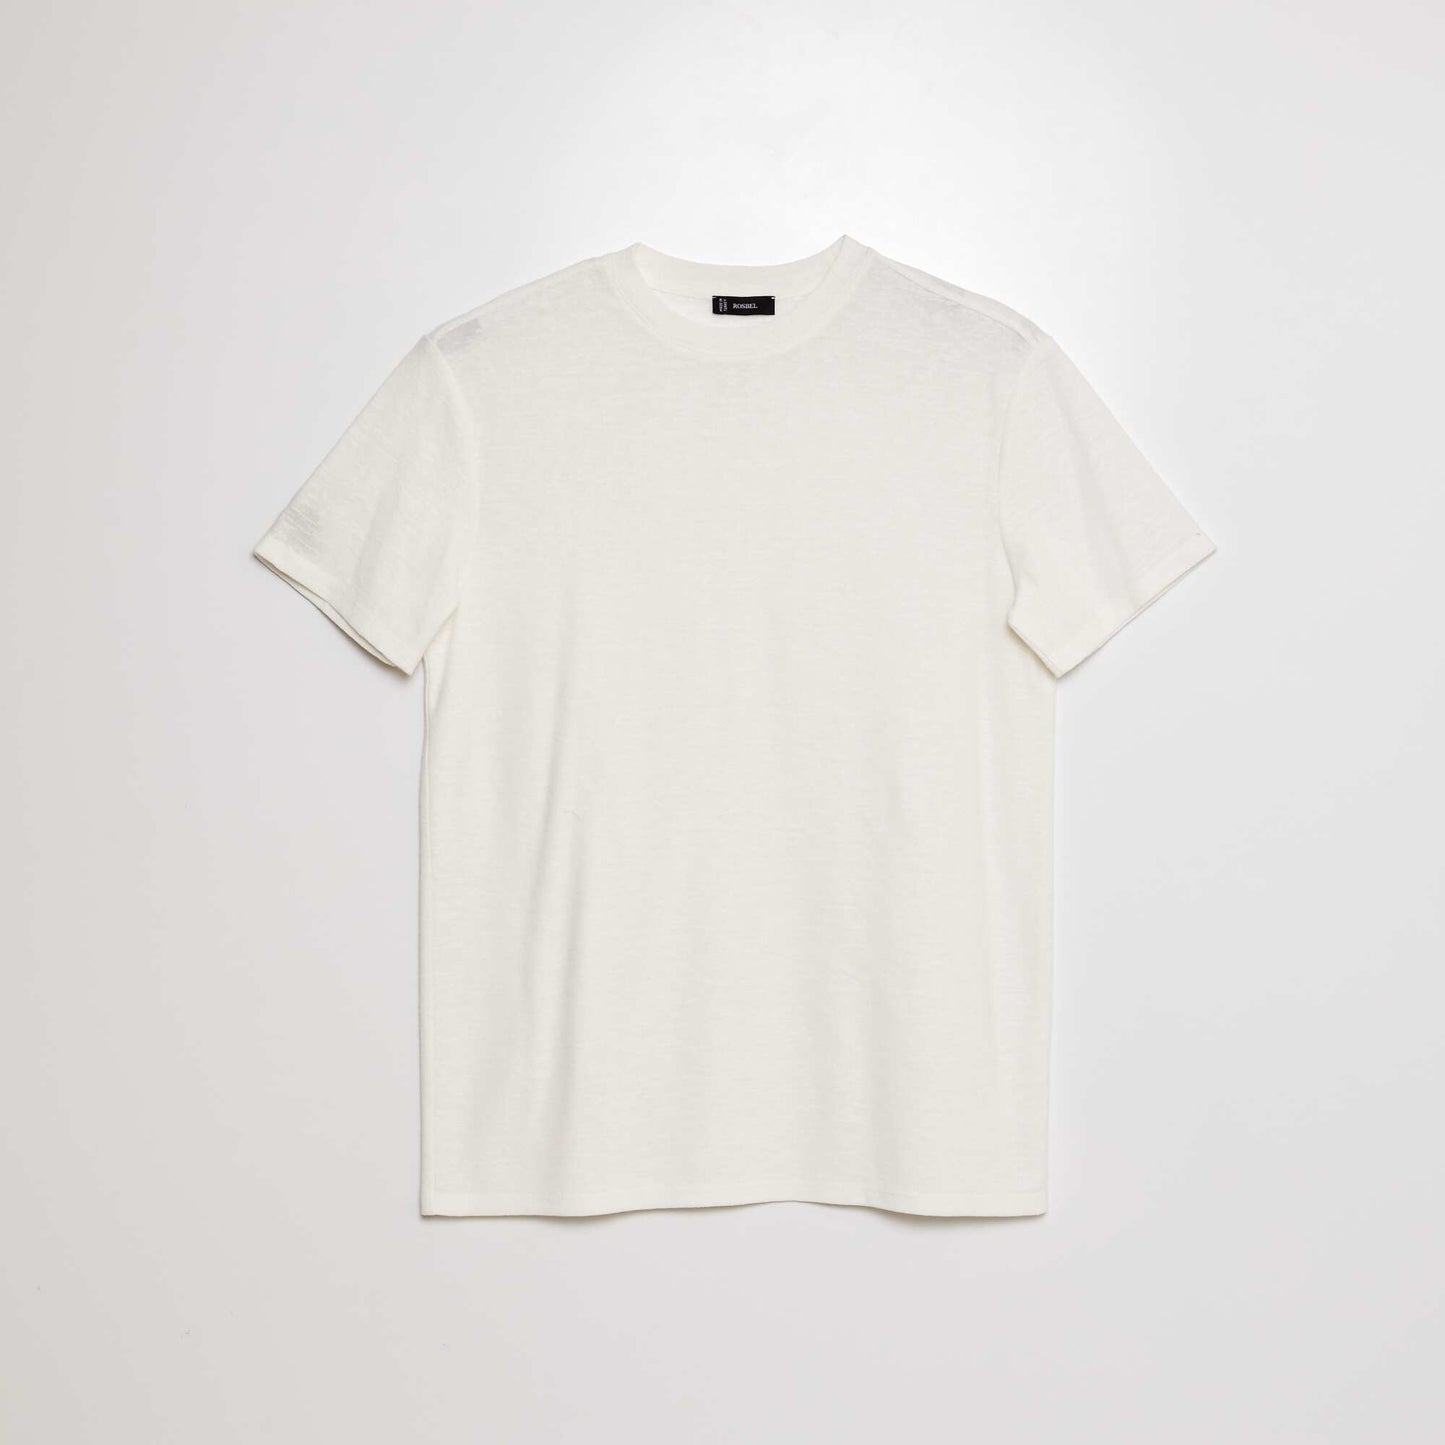 Textured knit T-shirt white